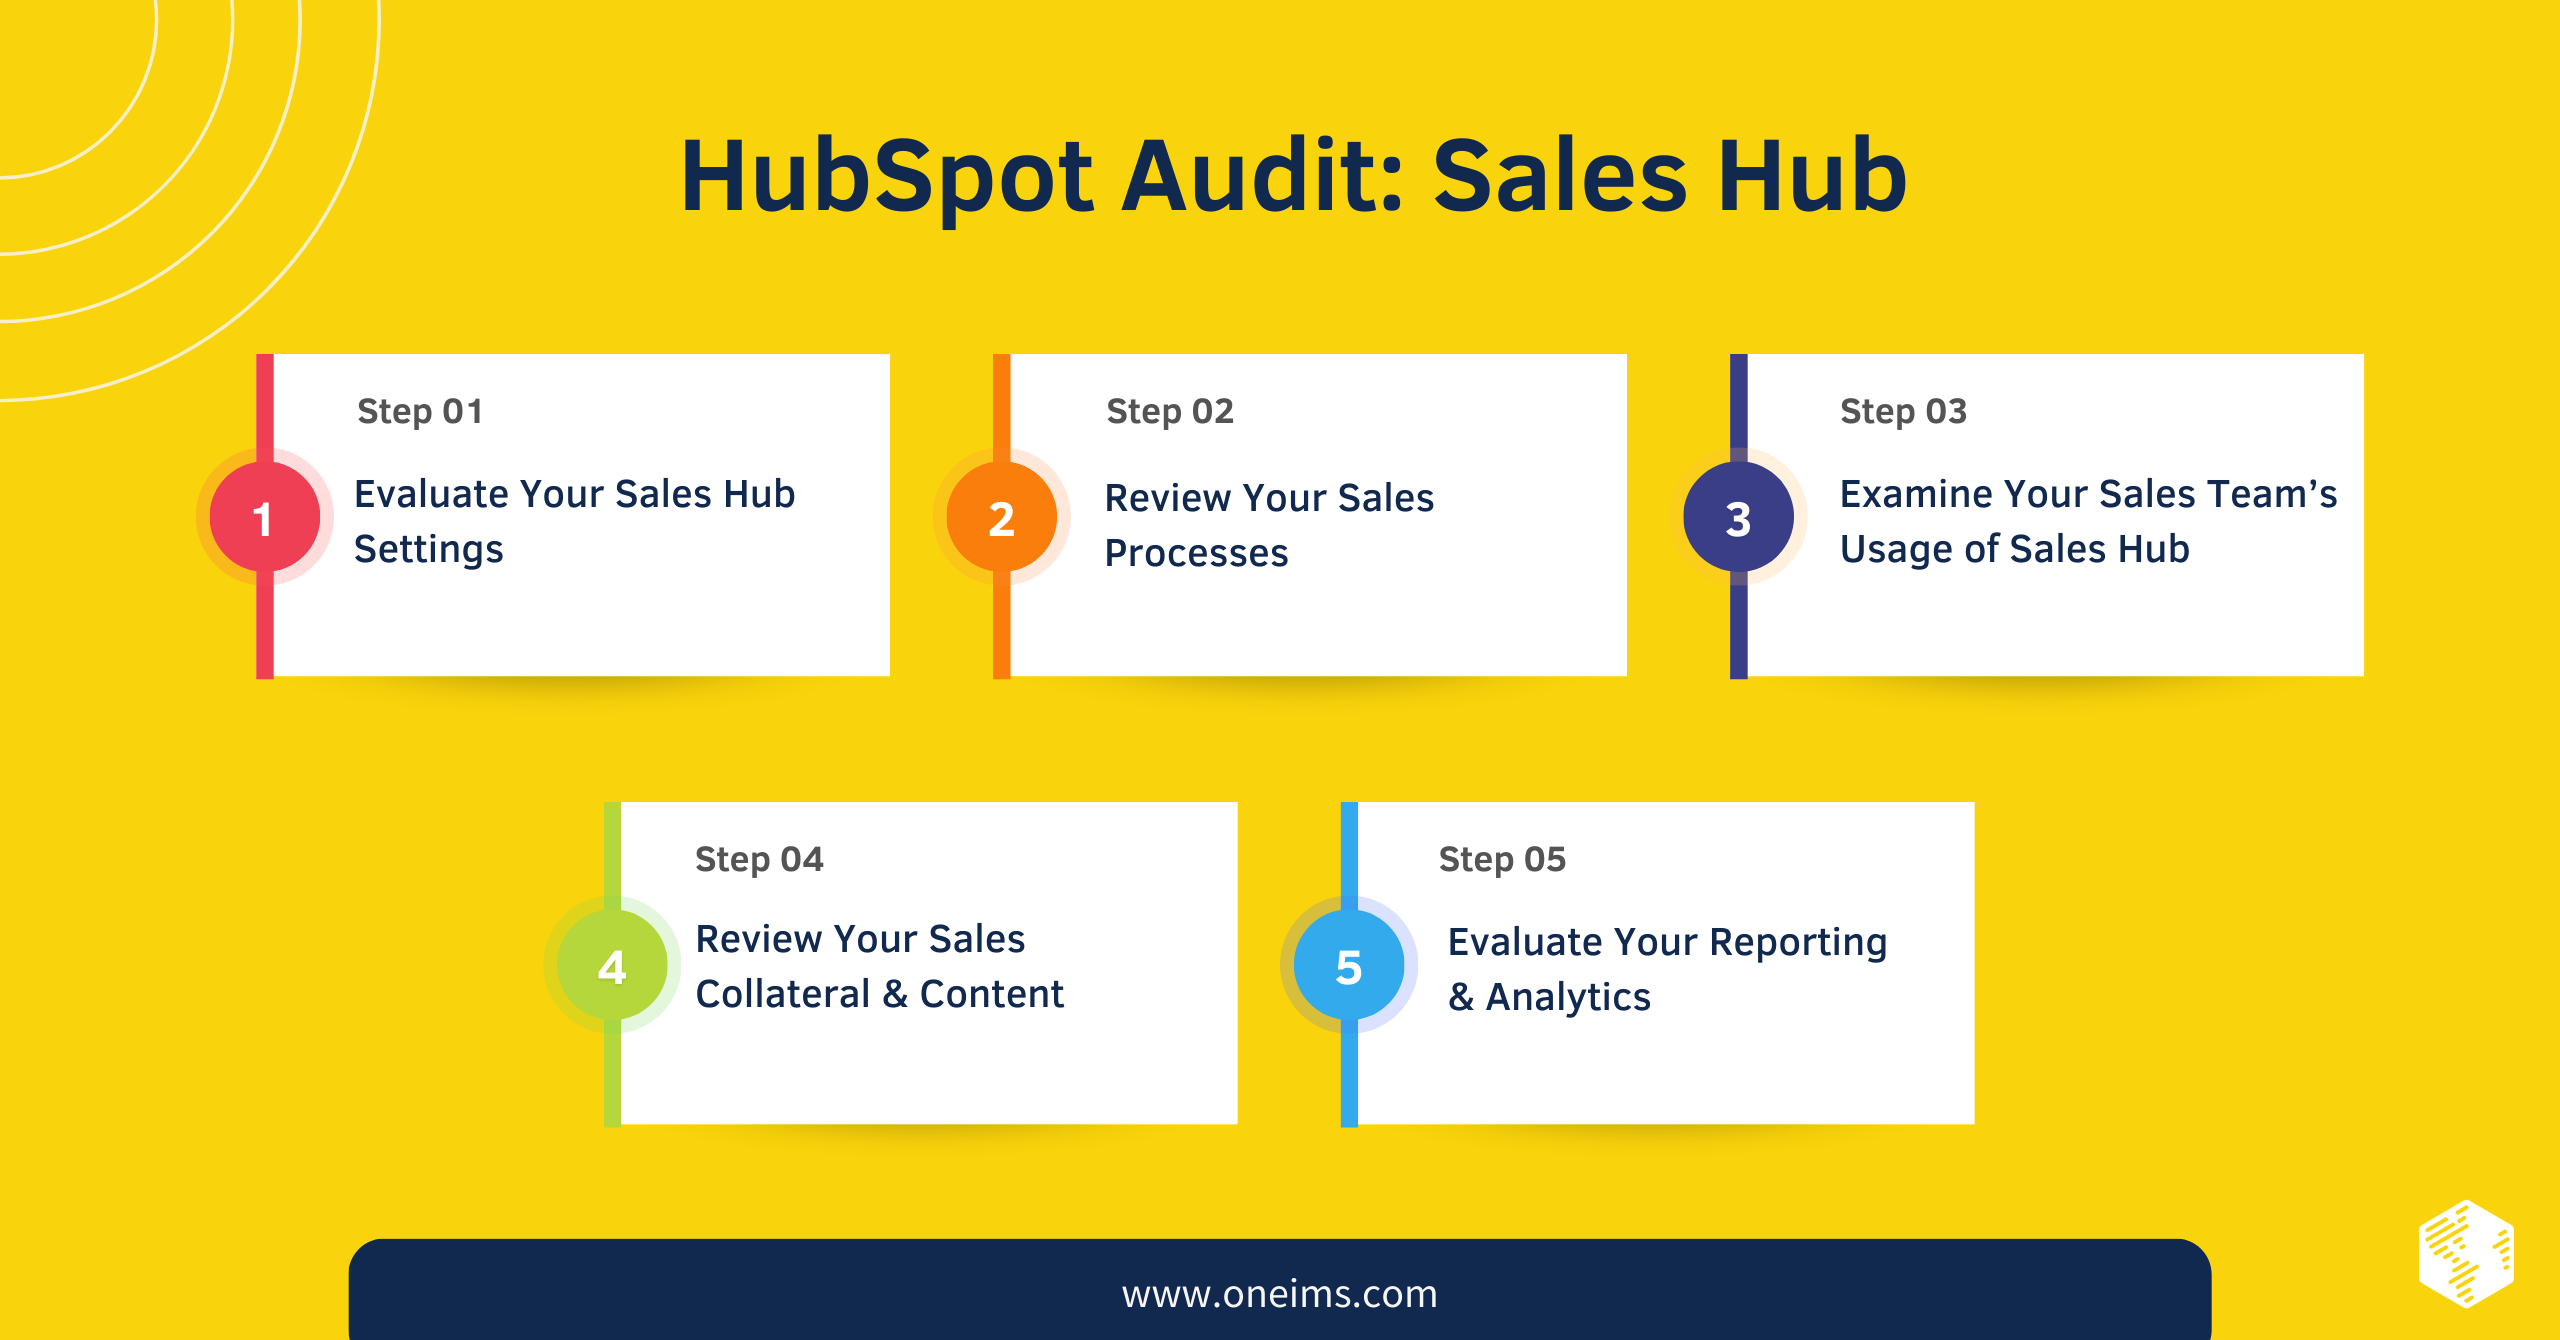 HubSpot Audit: Sales Hub